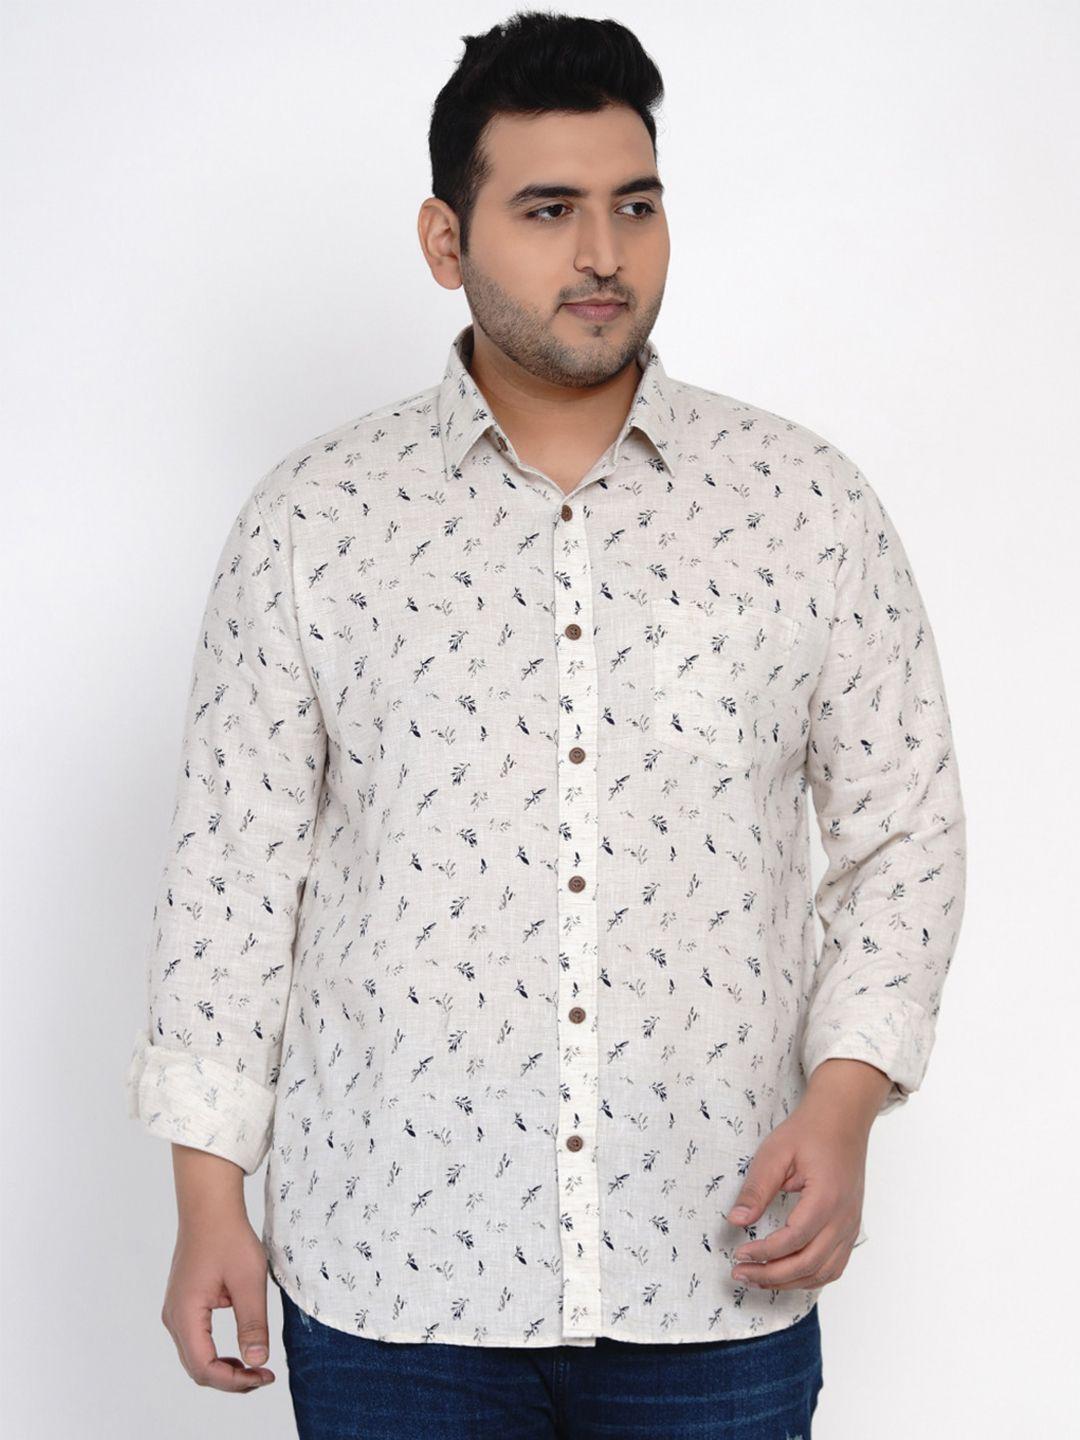 john pride plus size conversational printed long sleeves cotton casual shirt